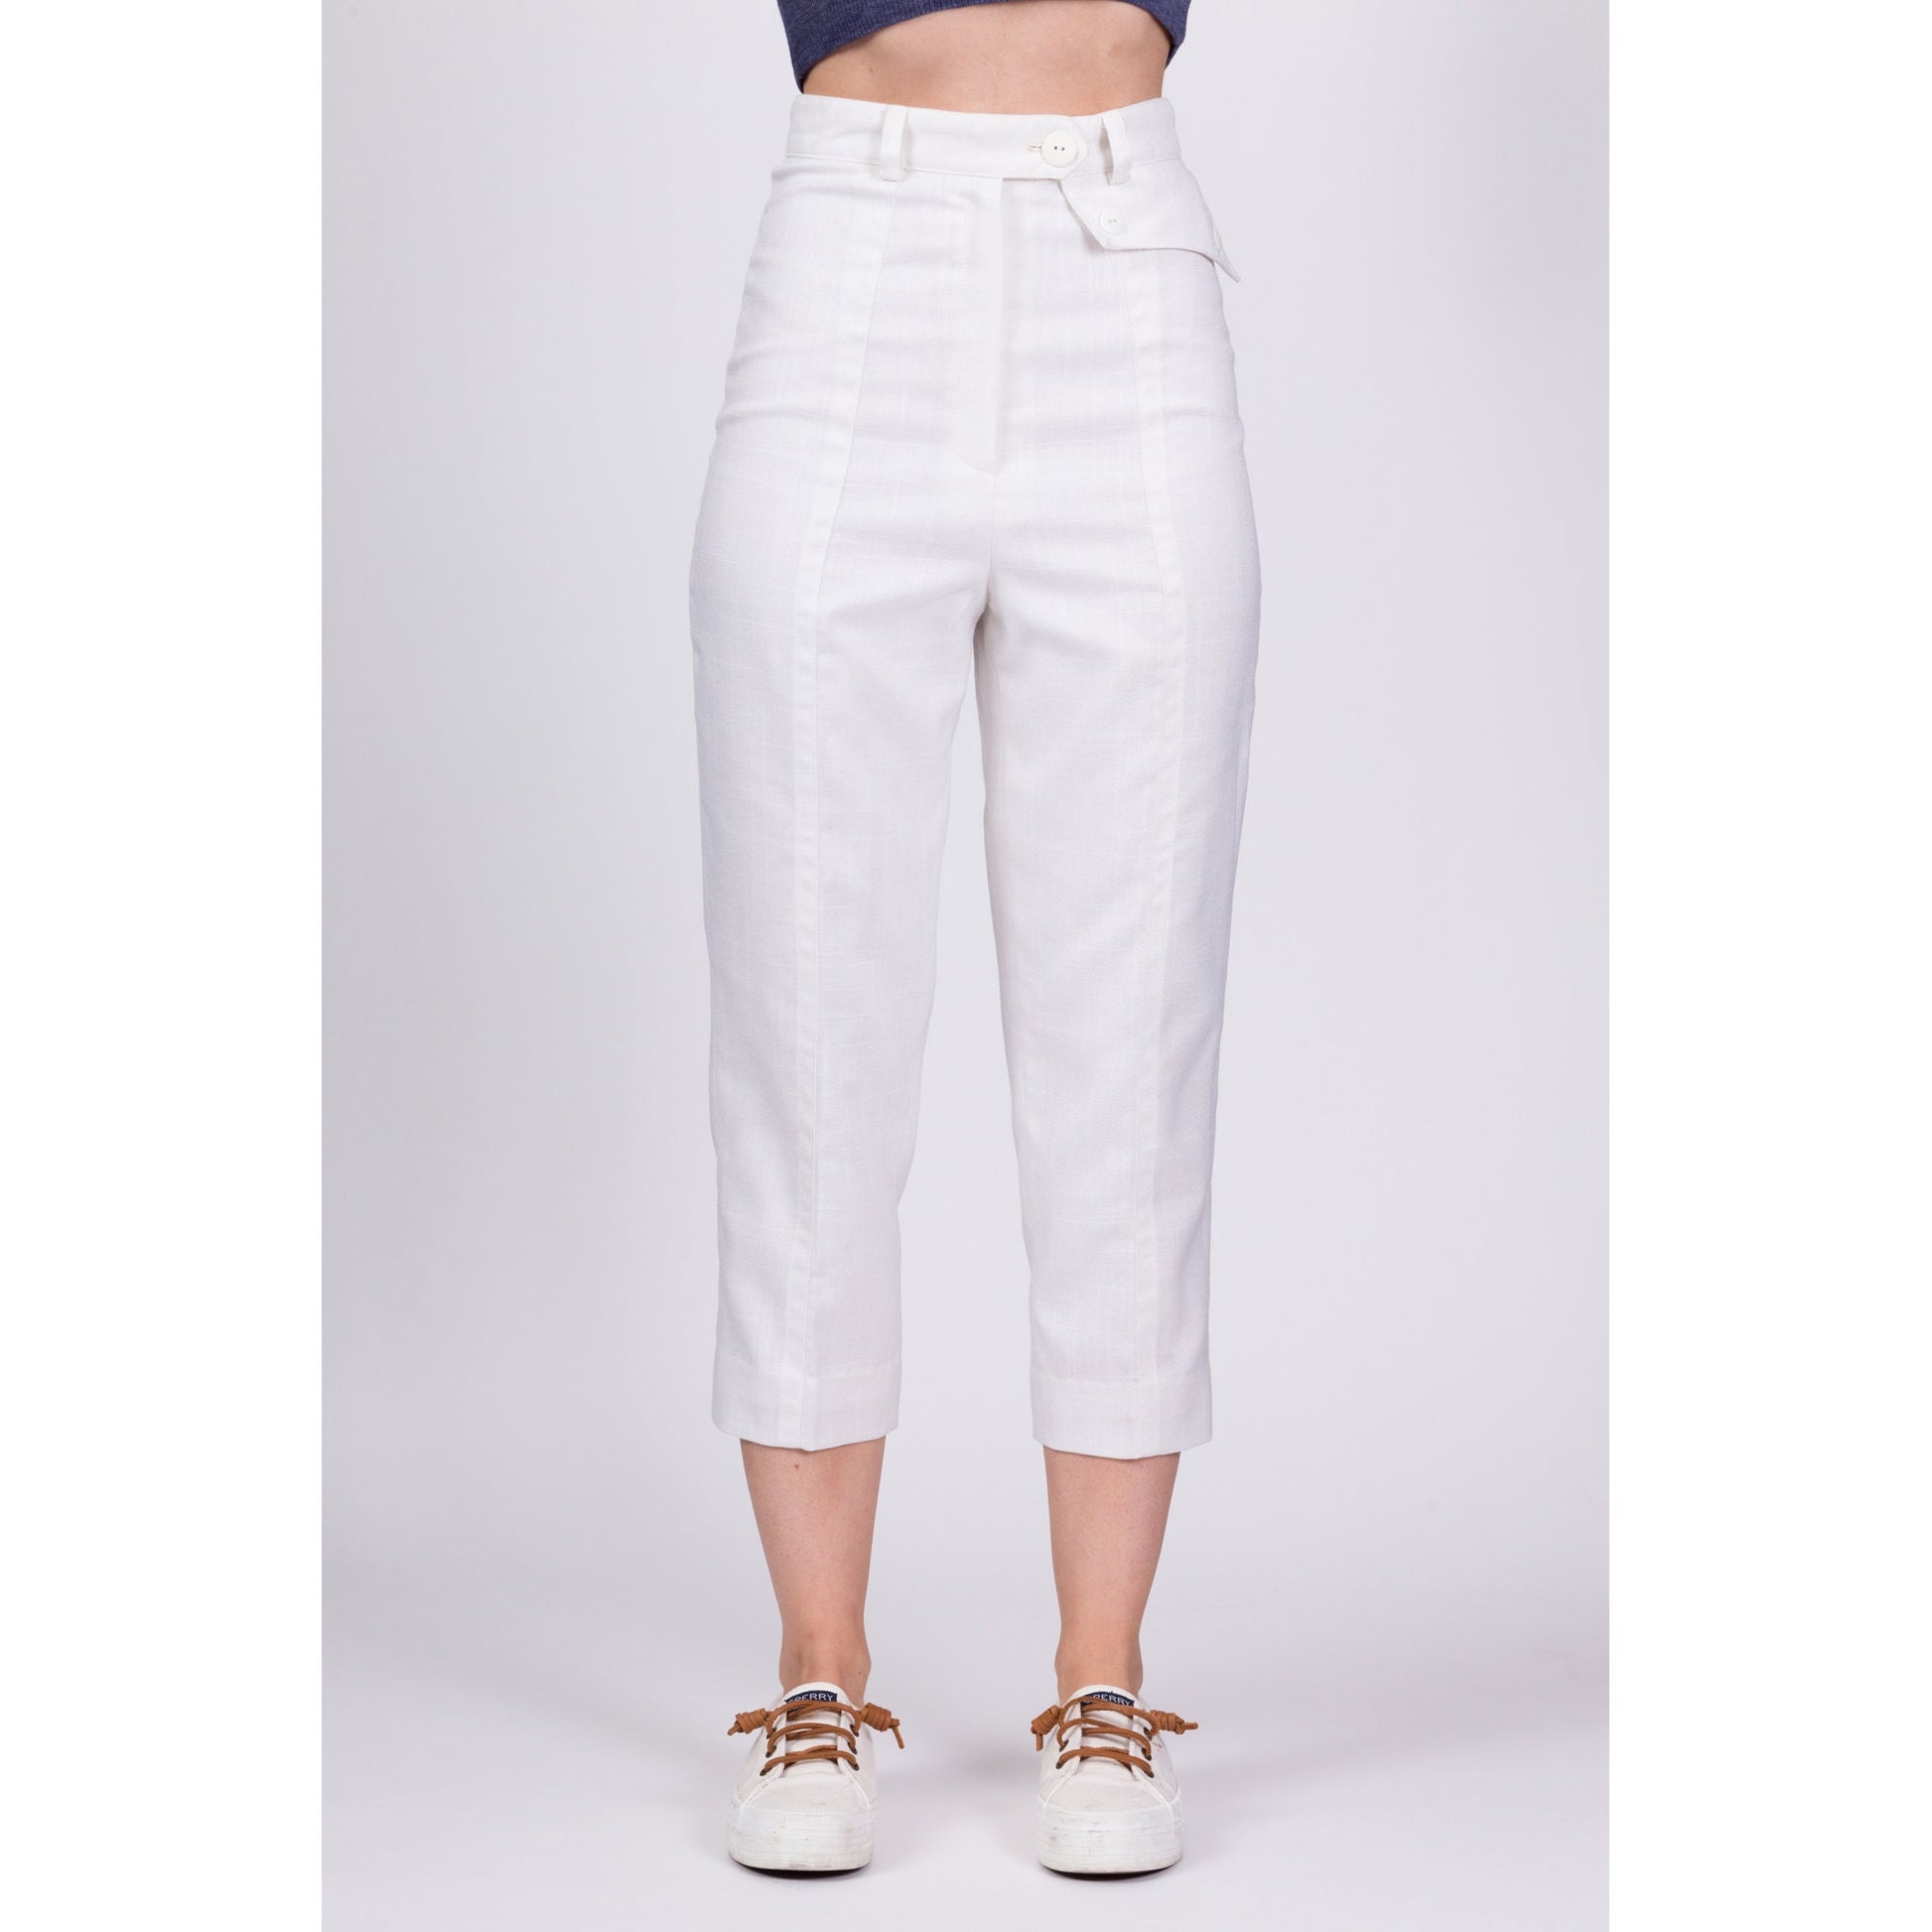 80s White High Waisted Capri Pants - Petite Extra Small, 23